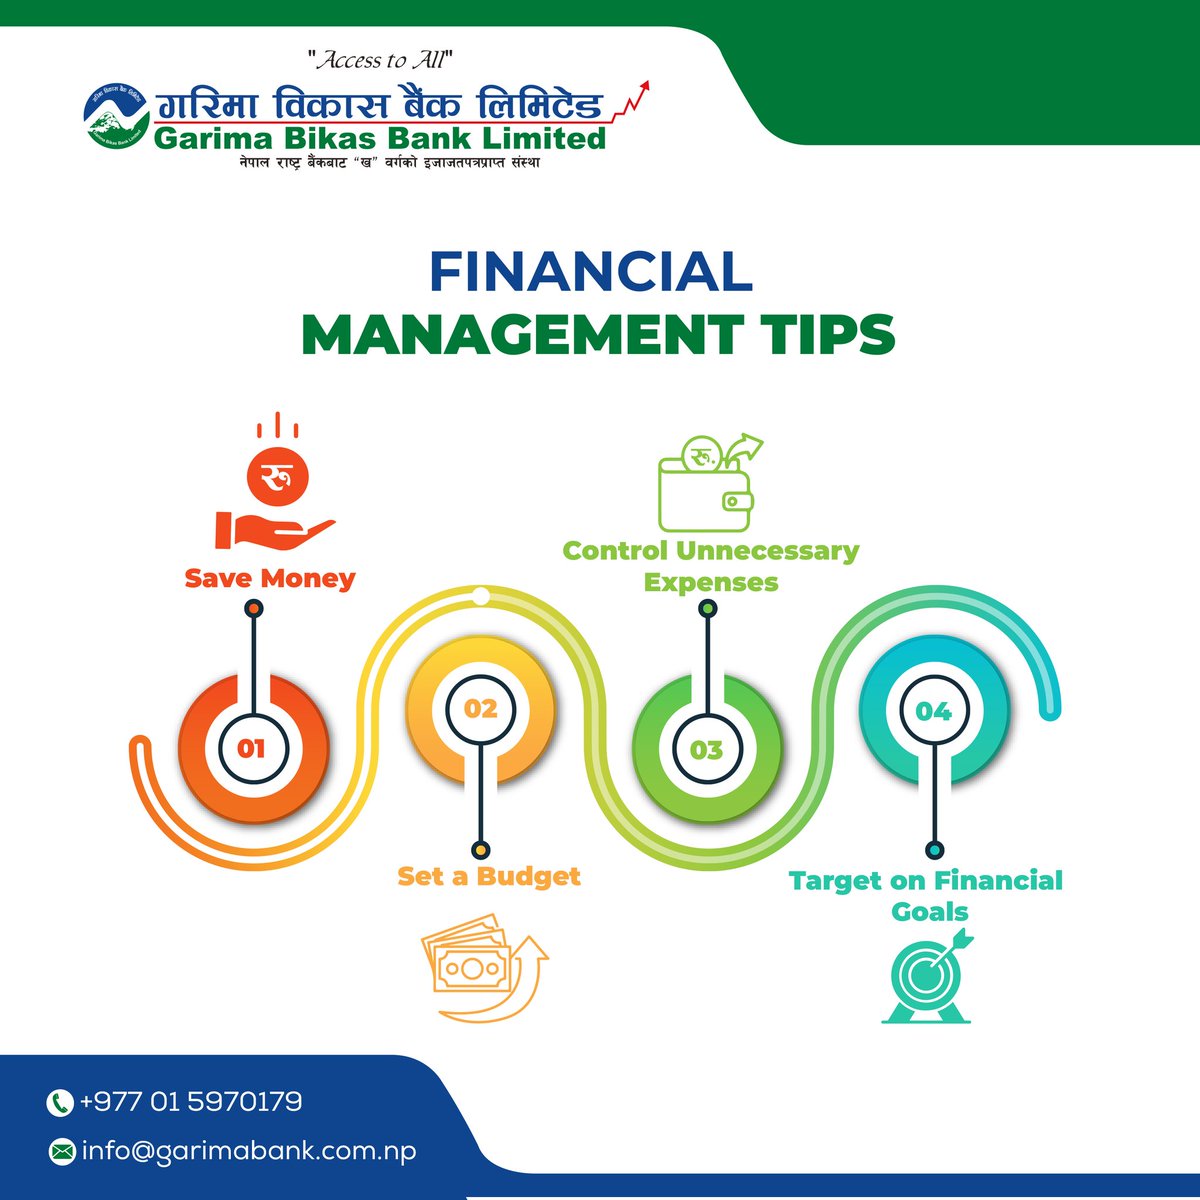 Plan your finances ,plan your future.
#Garimabikasbank
#AccessToAll
#Safedigitalbanking
#savingfuture
#financialmanagementtips